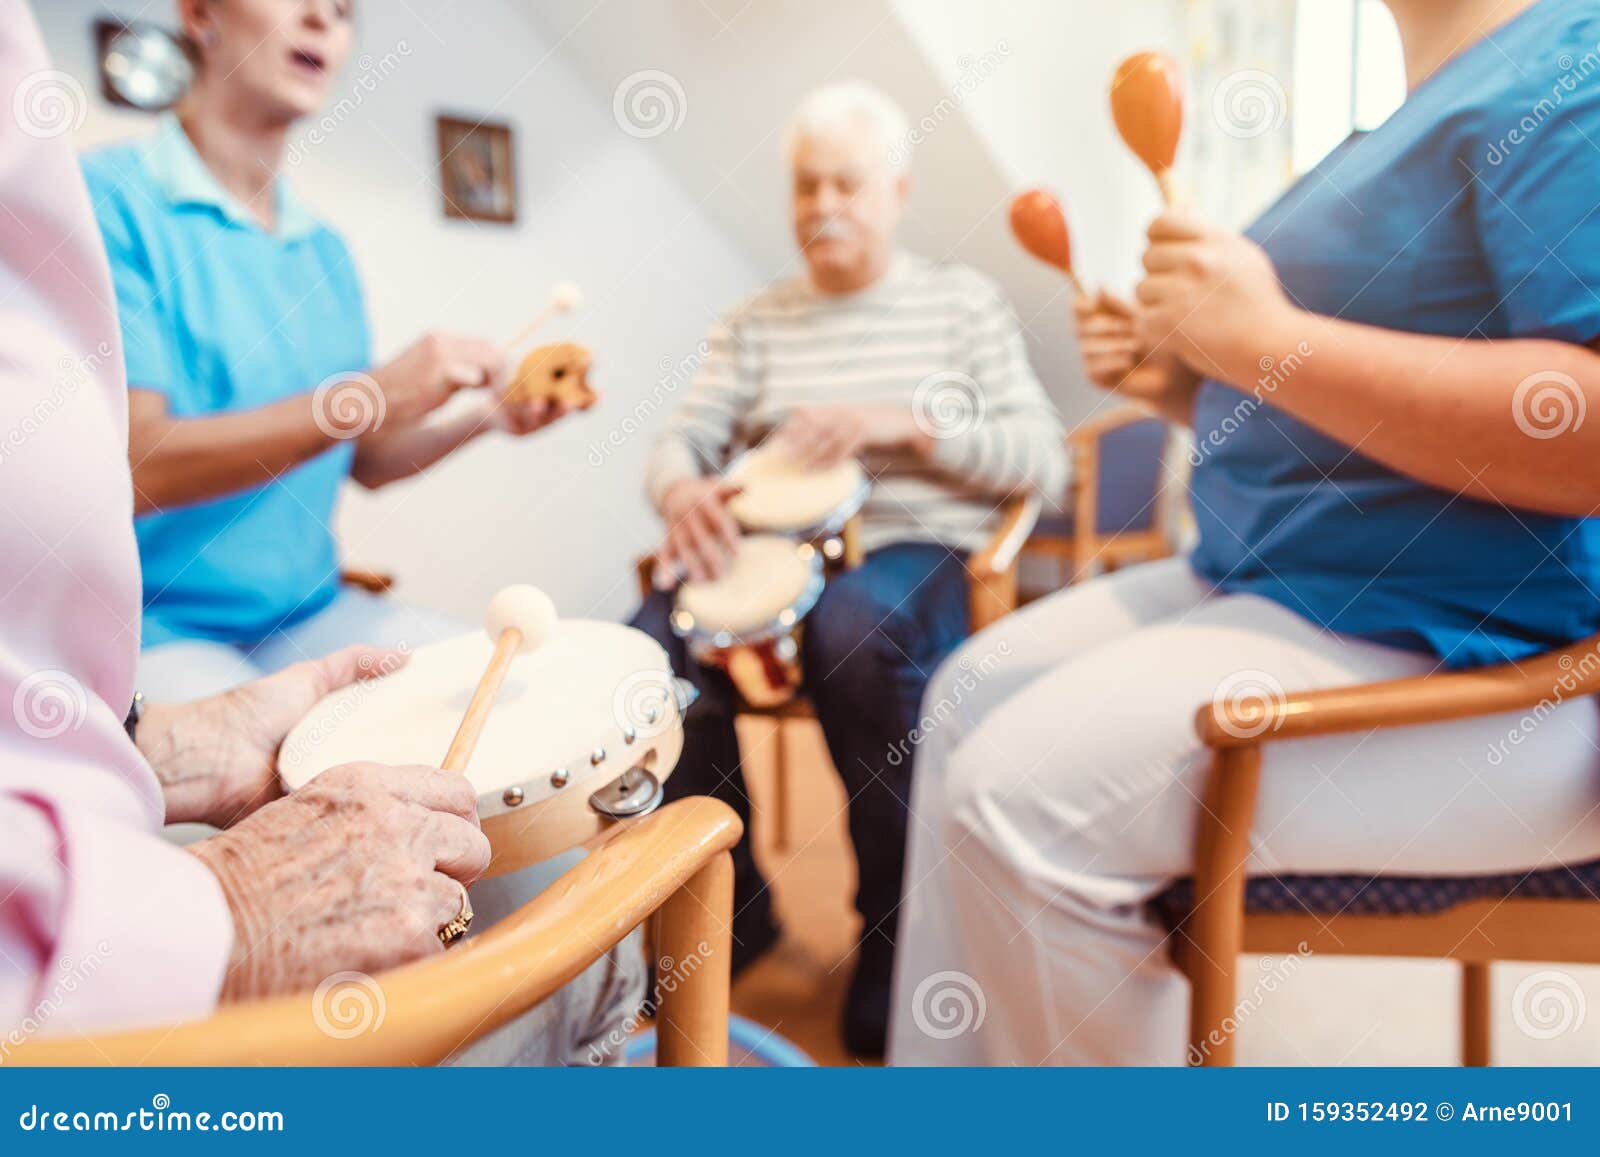 seniors in nursing home making music with rhythm instruments